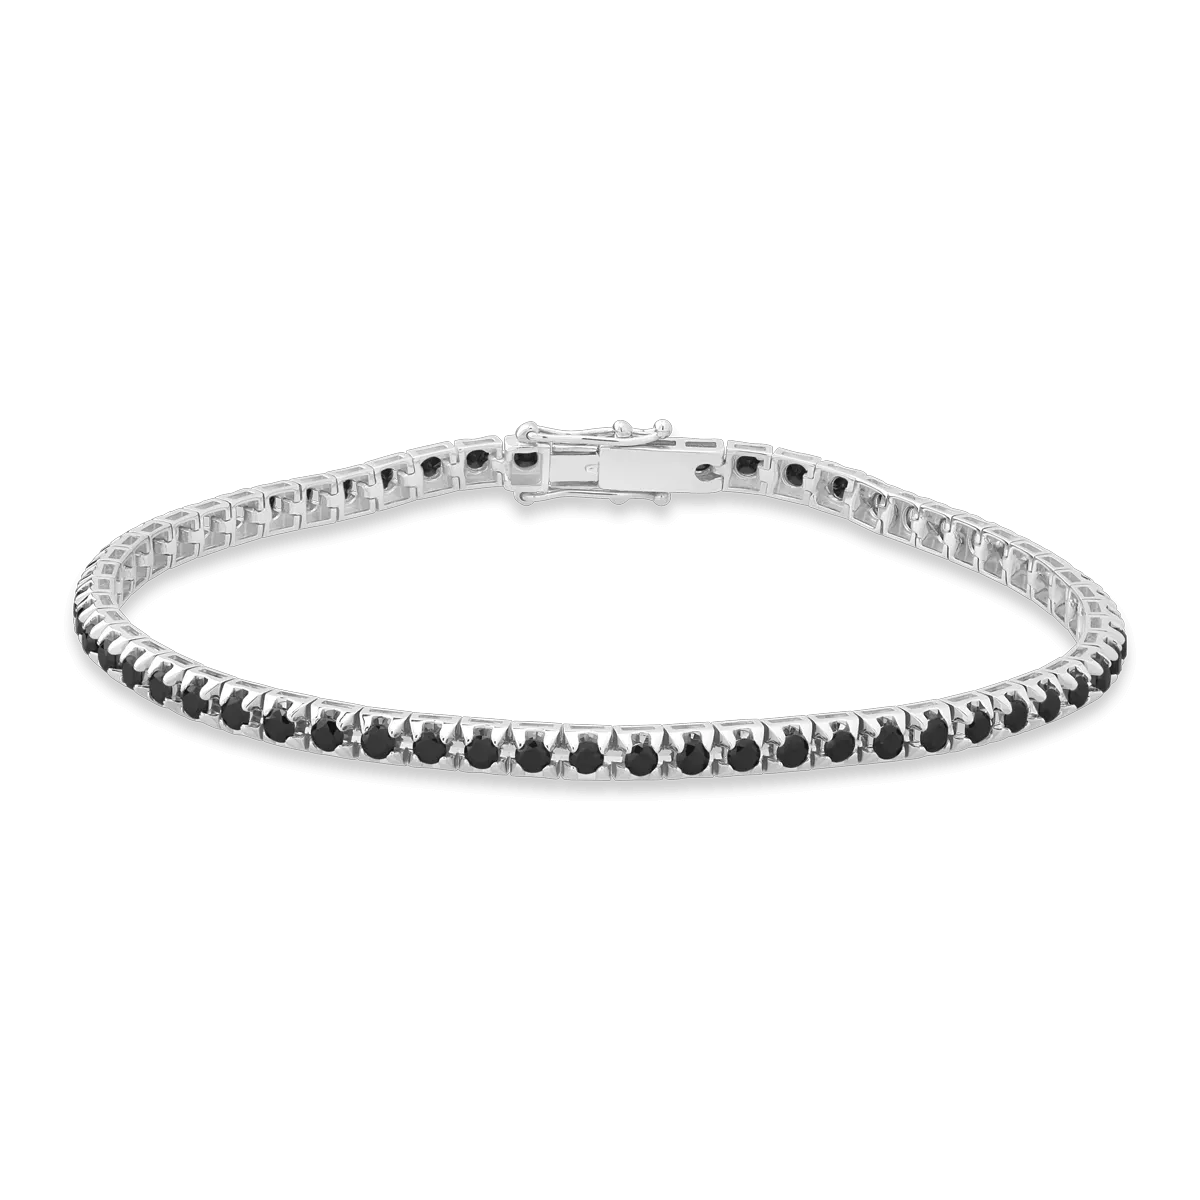 18K white gold tennis bracelet with 2.75ct black diamonds